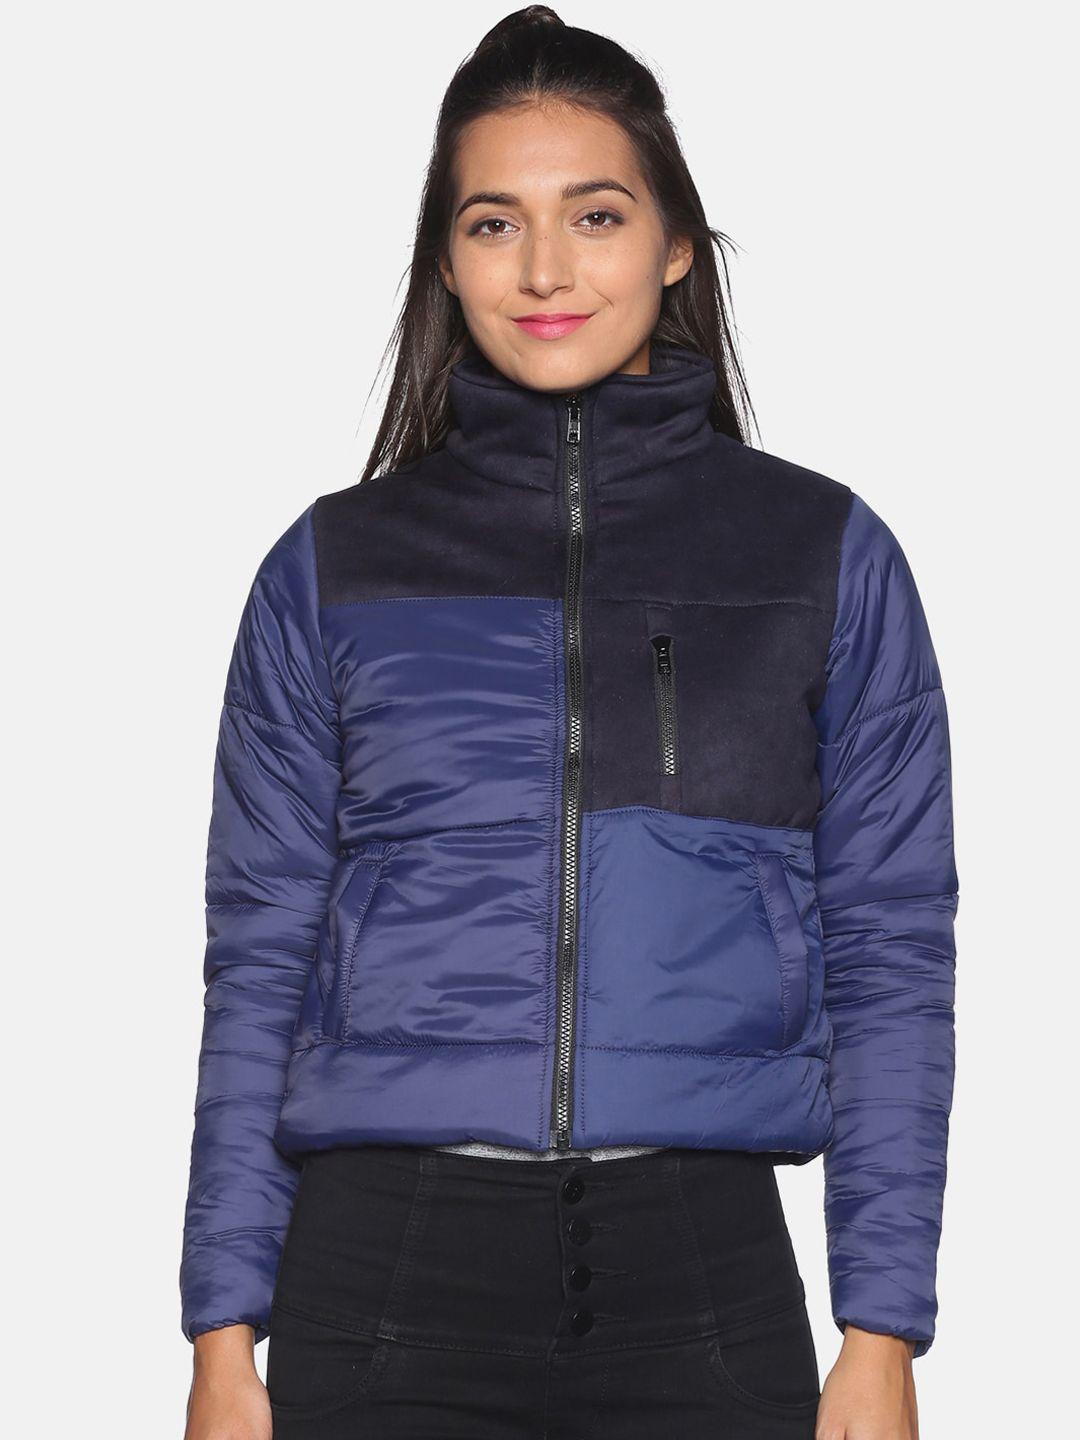 campus sutra women navy blue & black colourblocked  windcheater puffer jacket